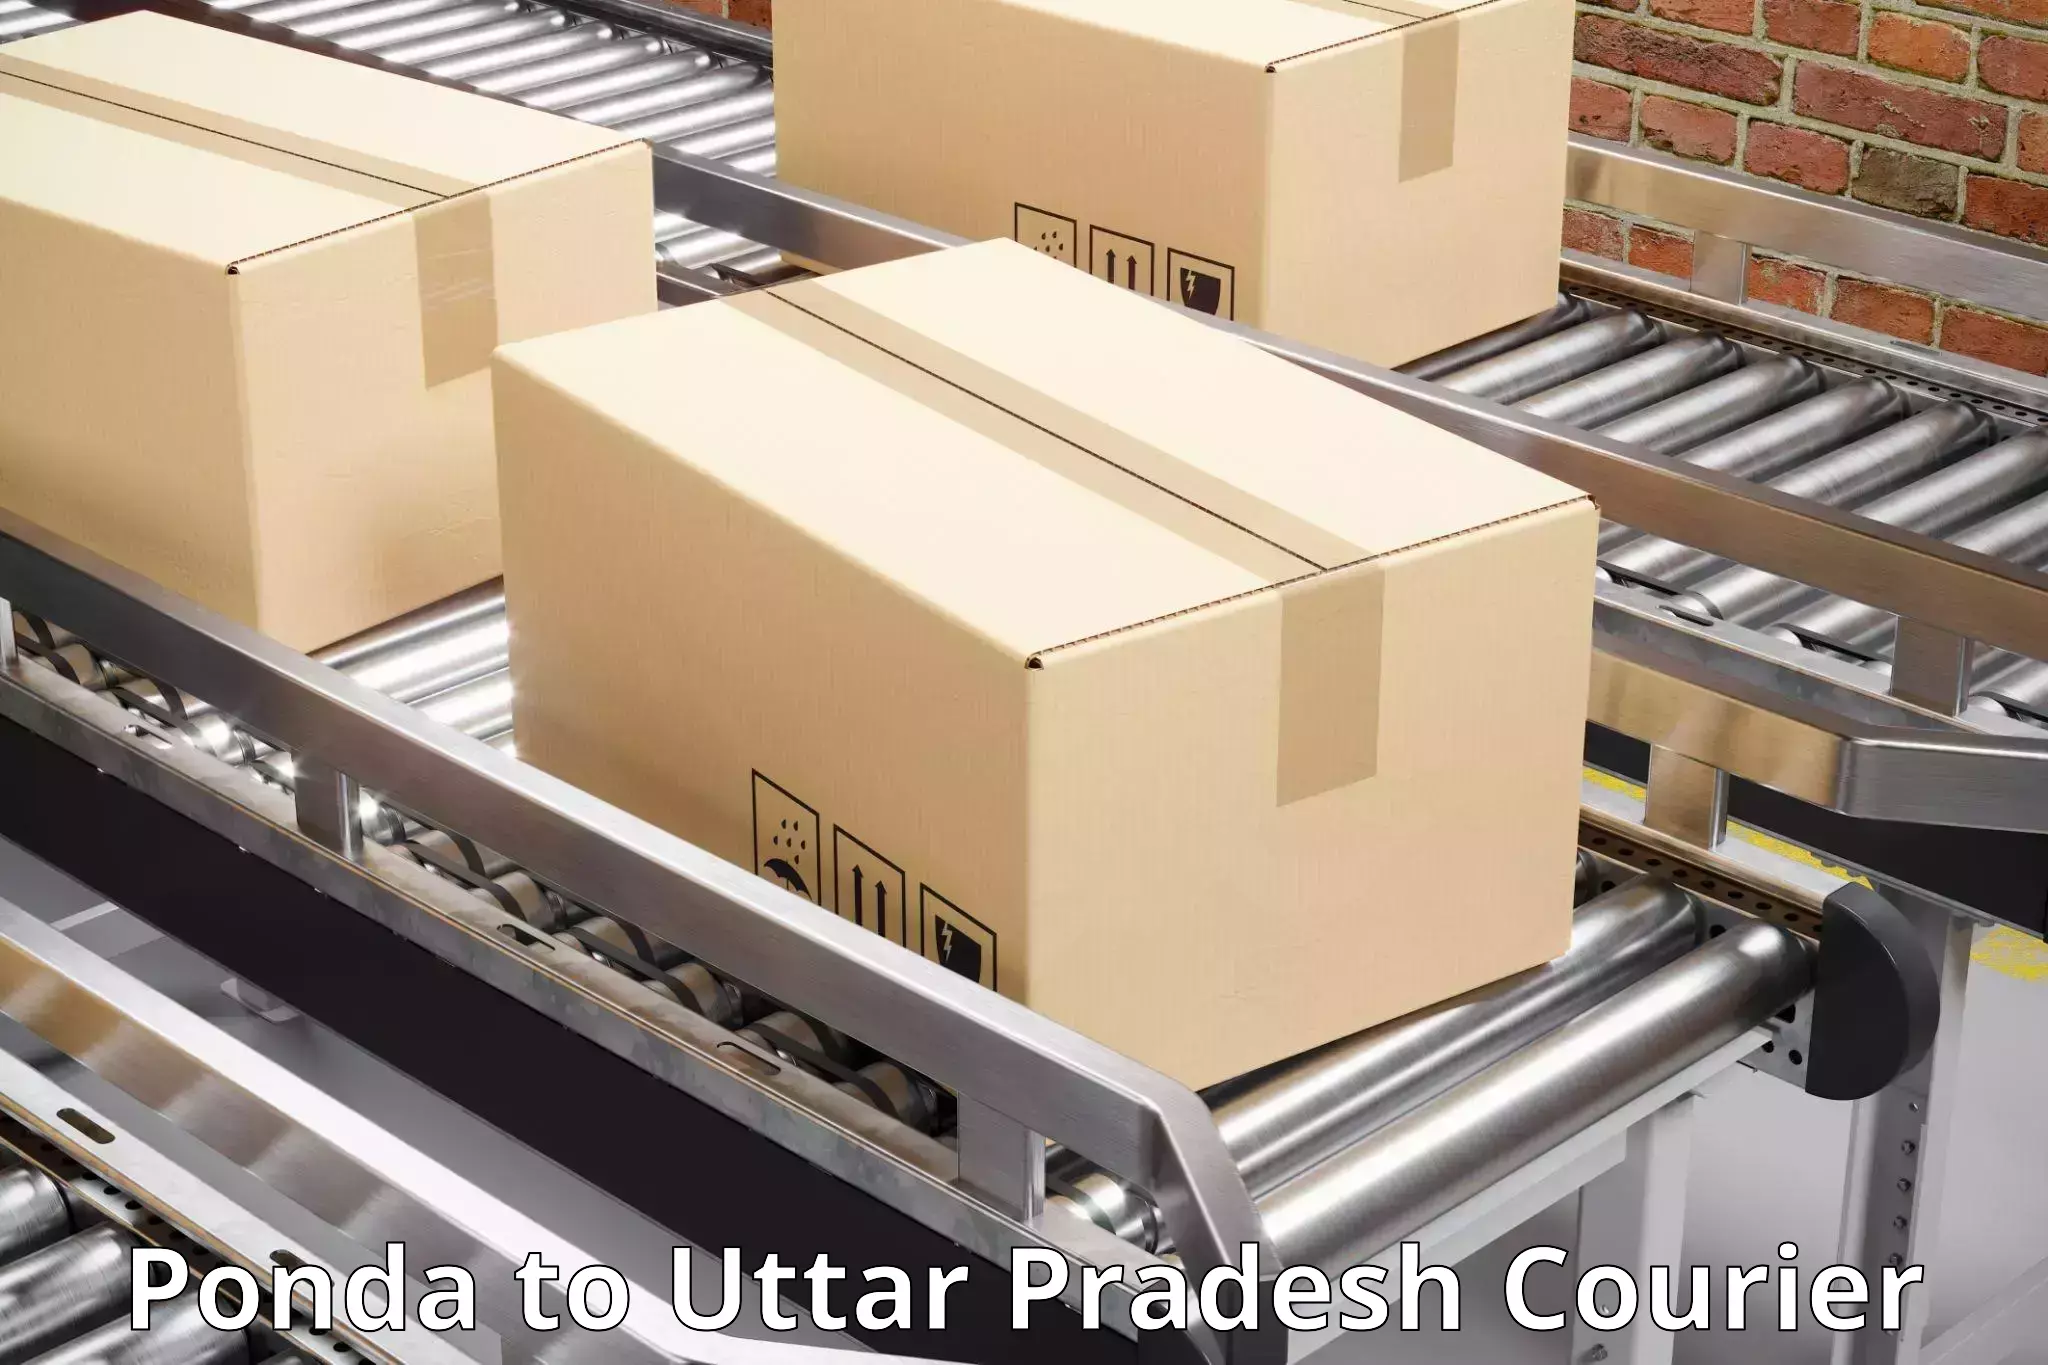 E-commerce fulfillment Ponda to Sahatwar